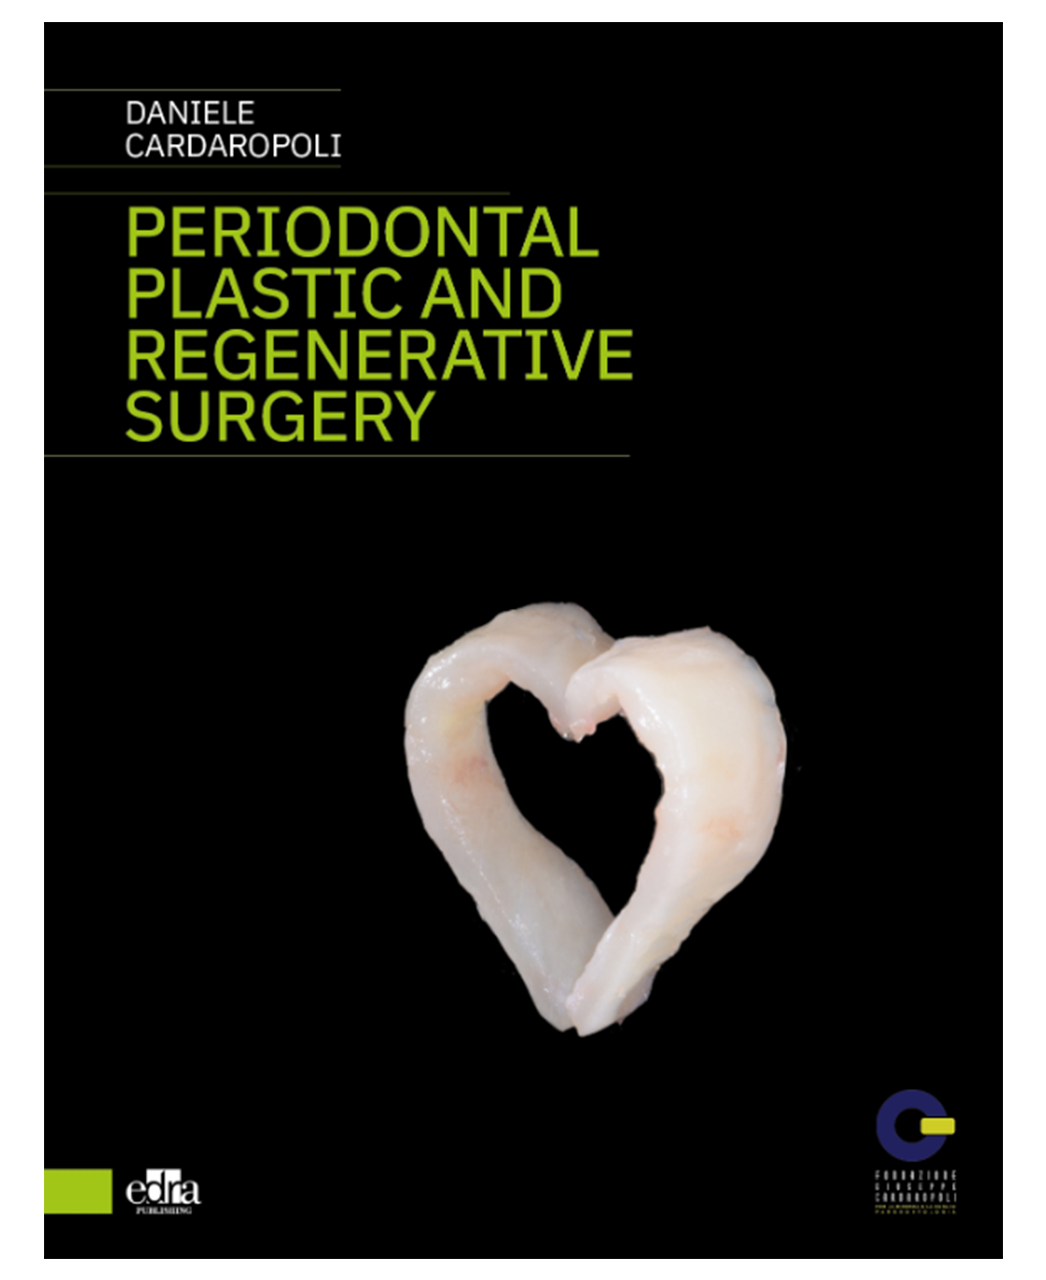 Periodontal plastic and regenerative surgery